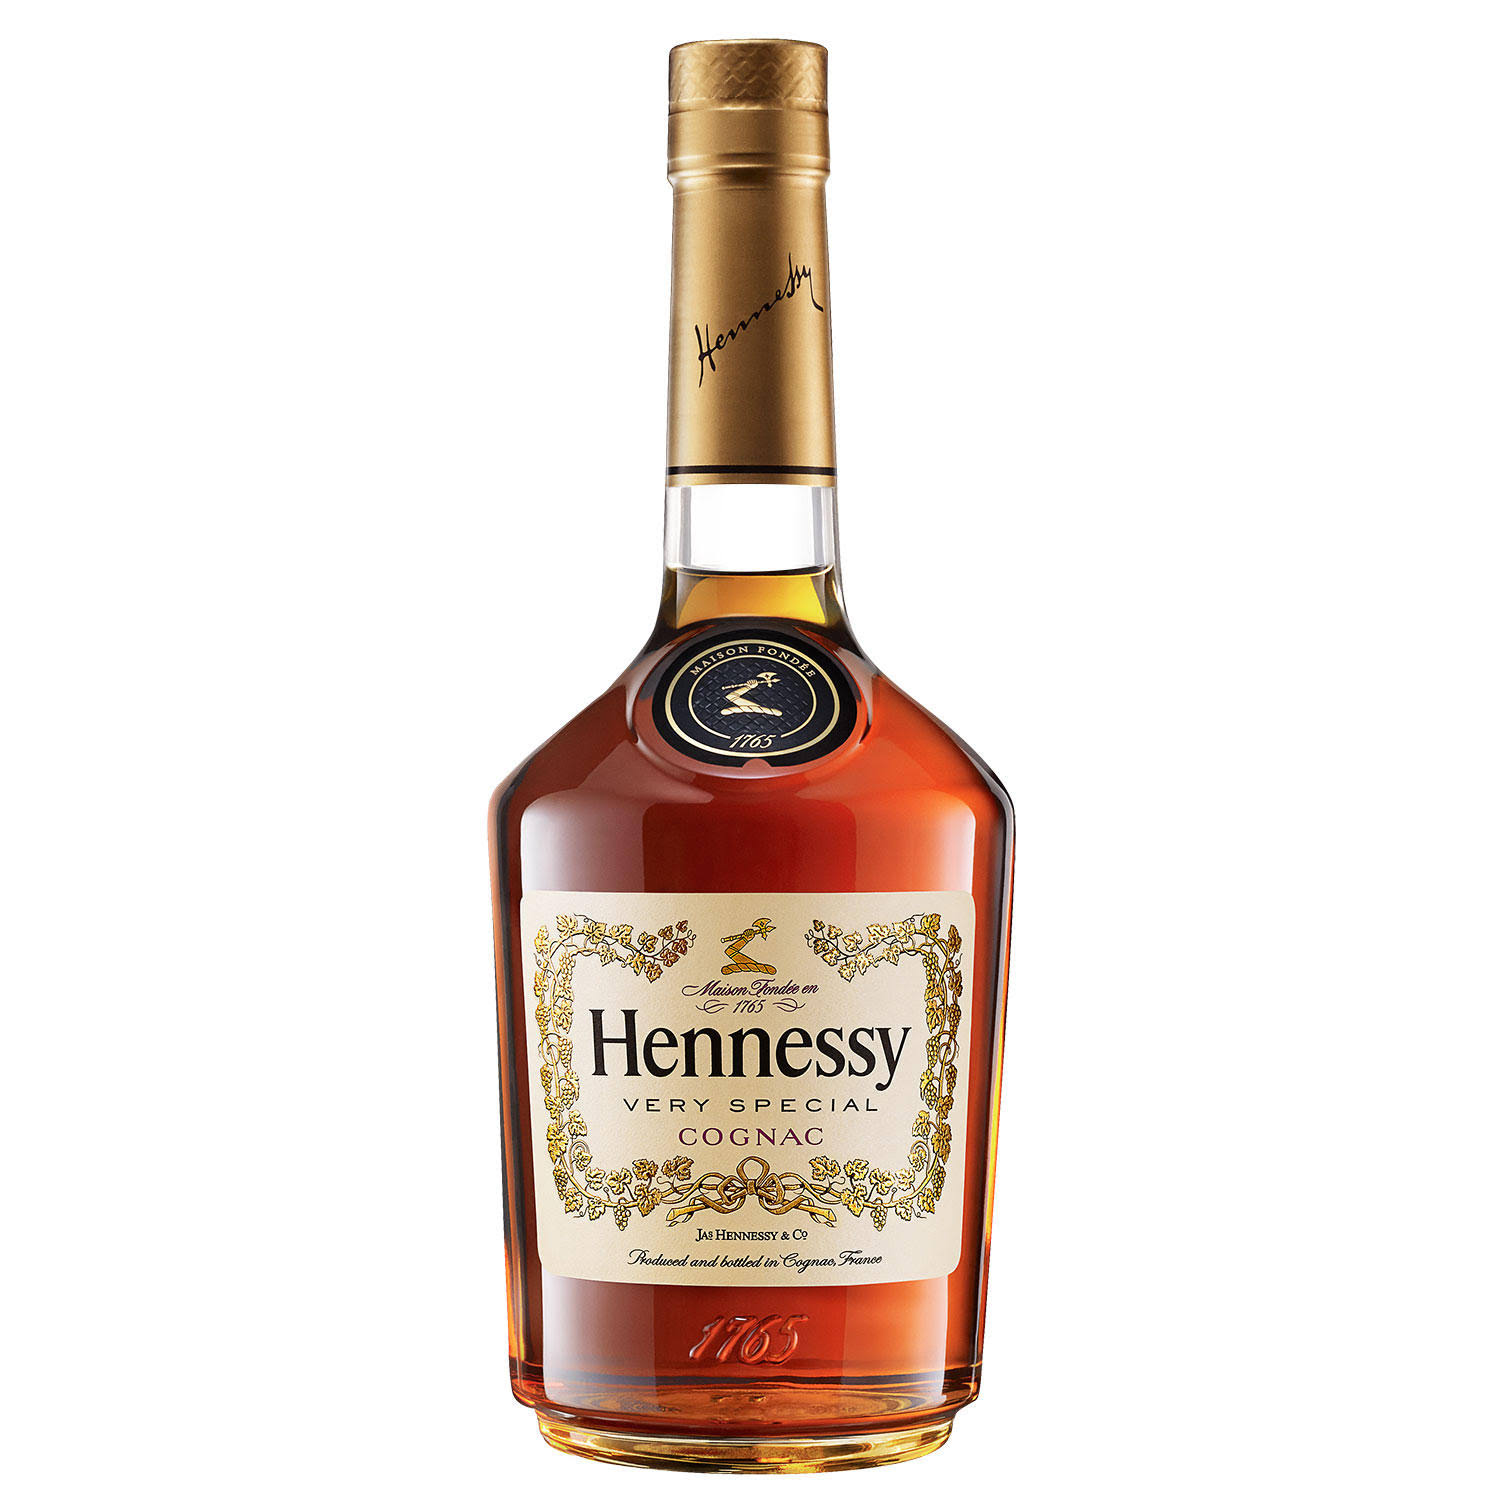 Hennessy VS Cognac - 750ml